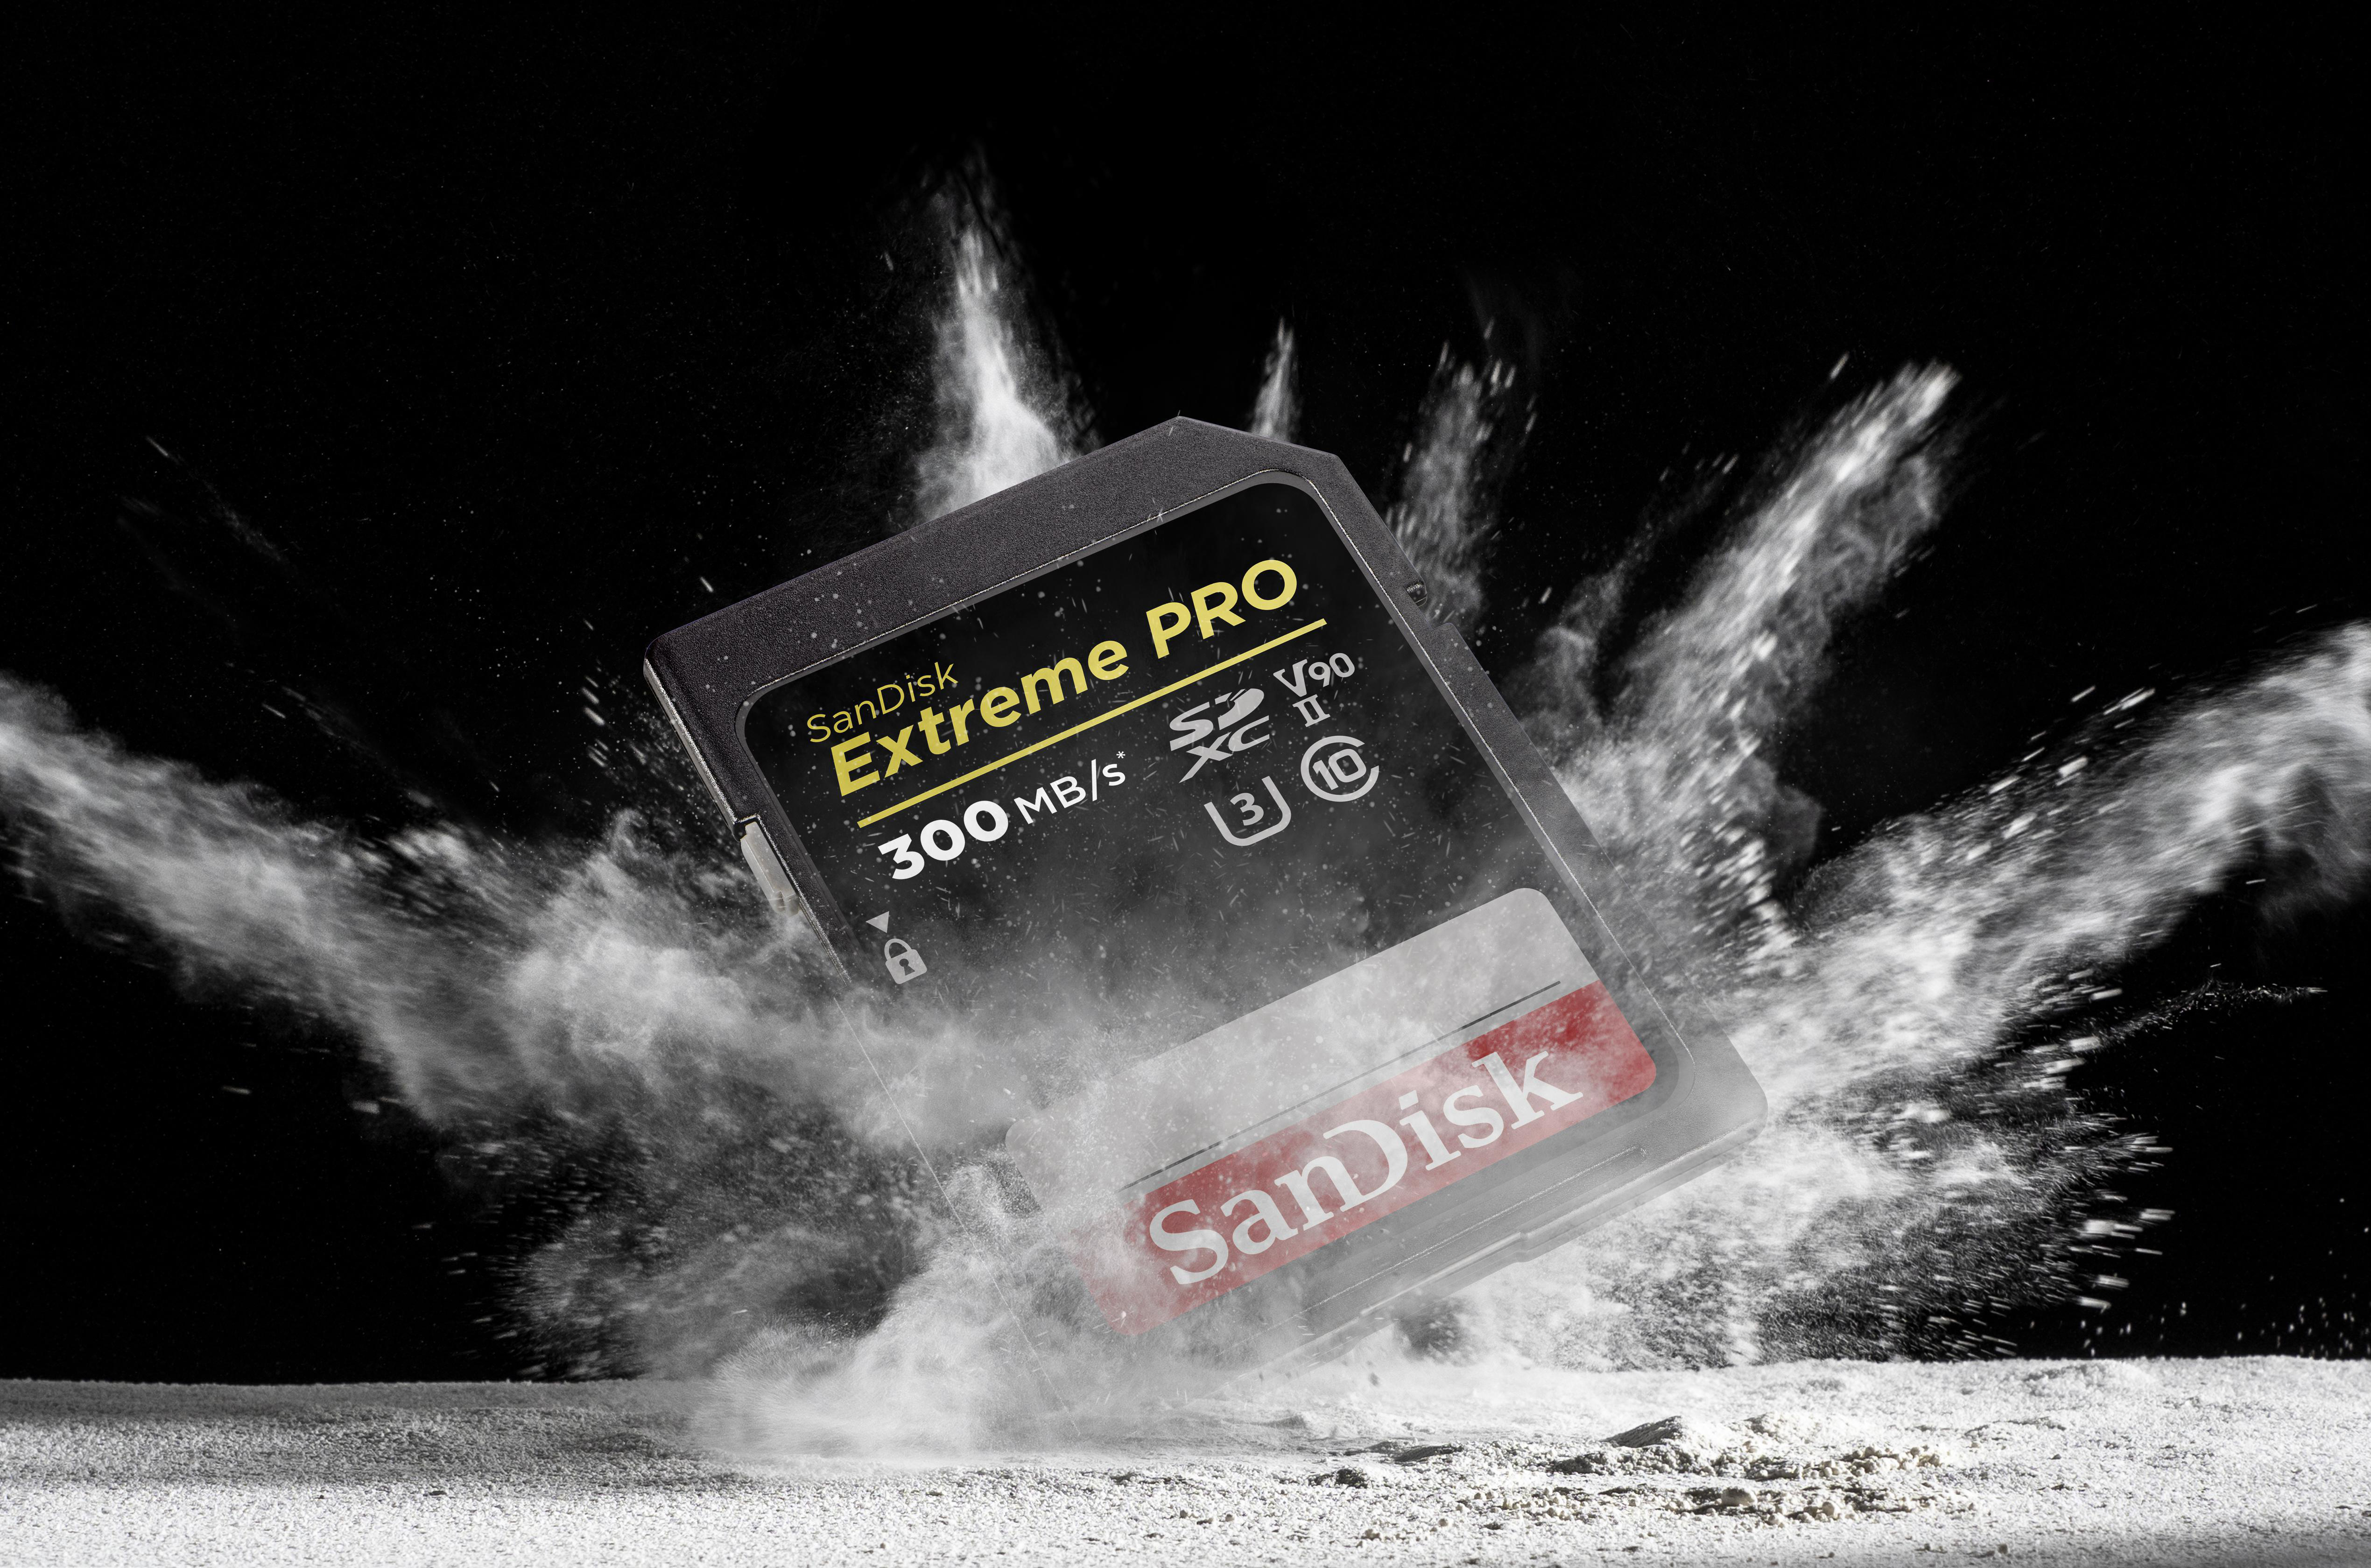 128 GB, Extreme PRO® Speicherkarte, SANDISK SDXC 300 UHS-II, MB/s